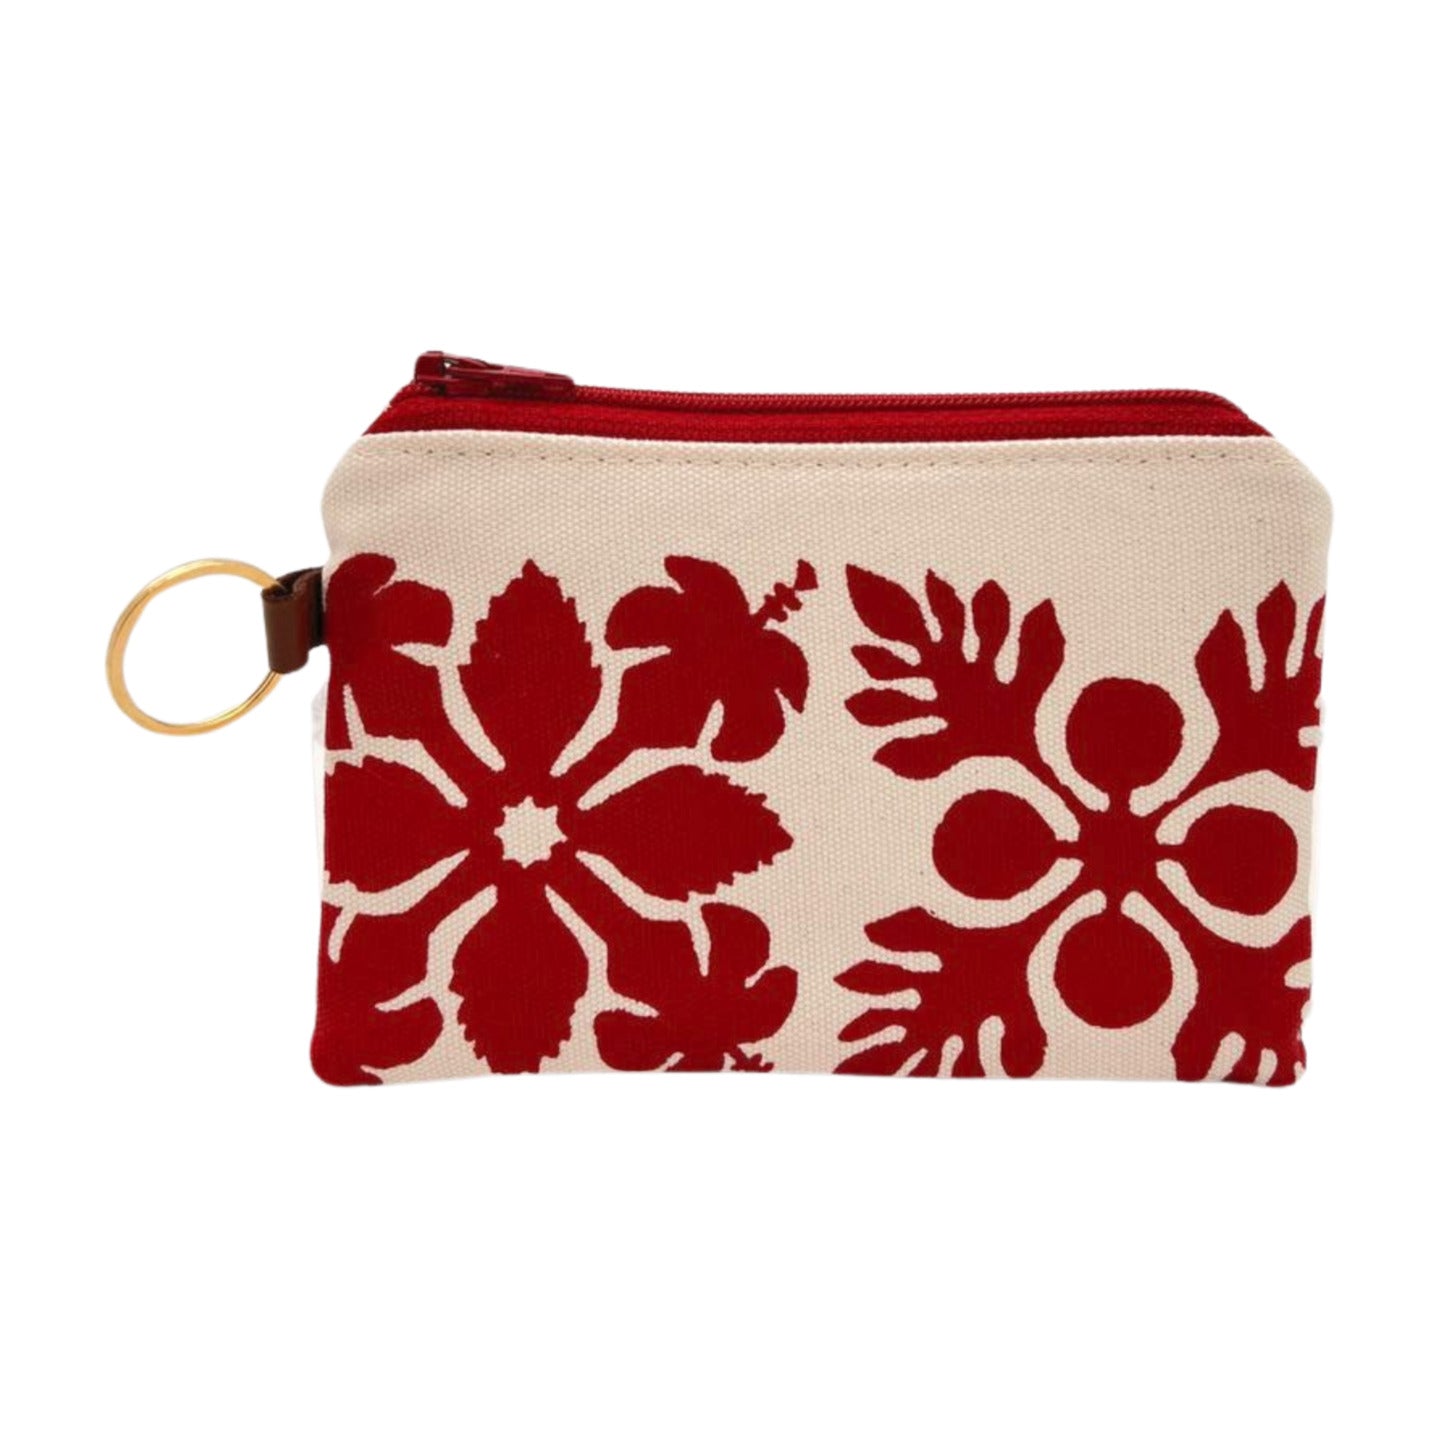 Pop-Up Mākeke - A Maui Day Original Handbags - Handprinted Mini Handbag - Red Quilt on Canvas - Front View